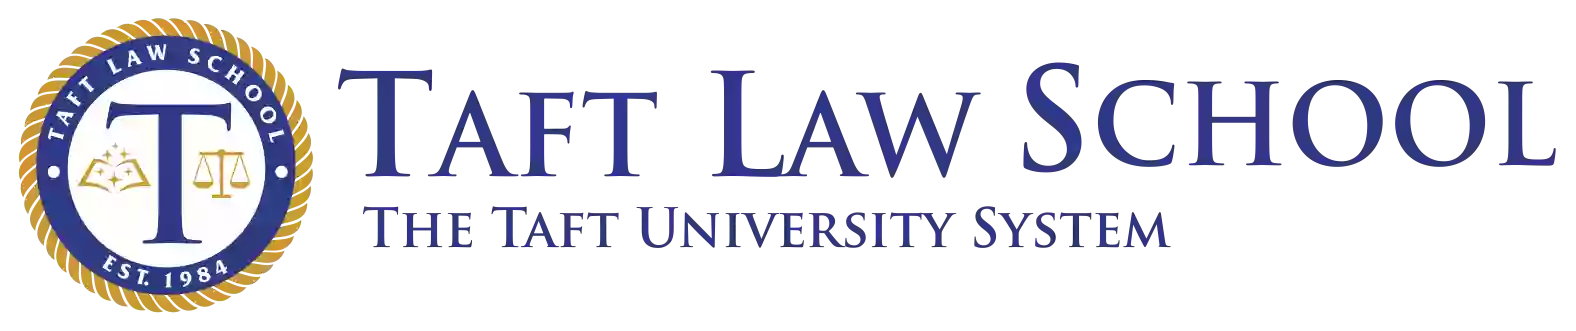 Taft Law School